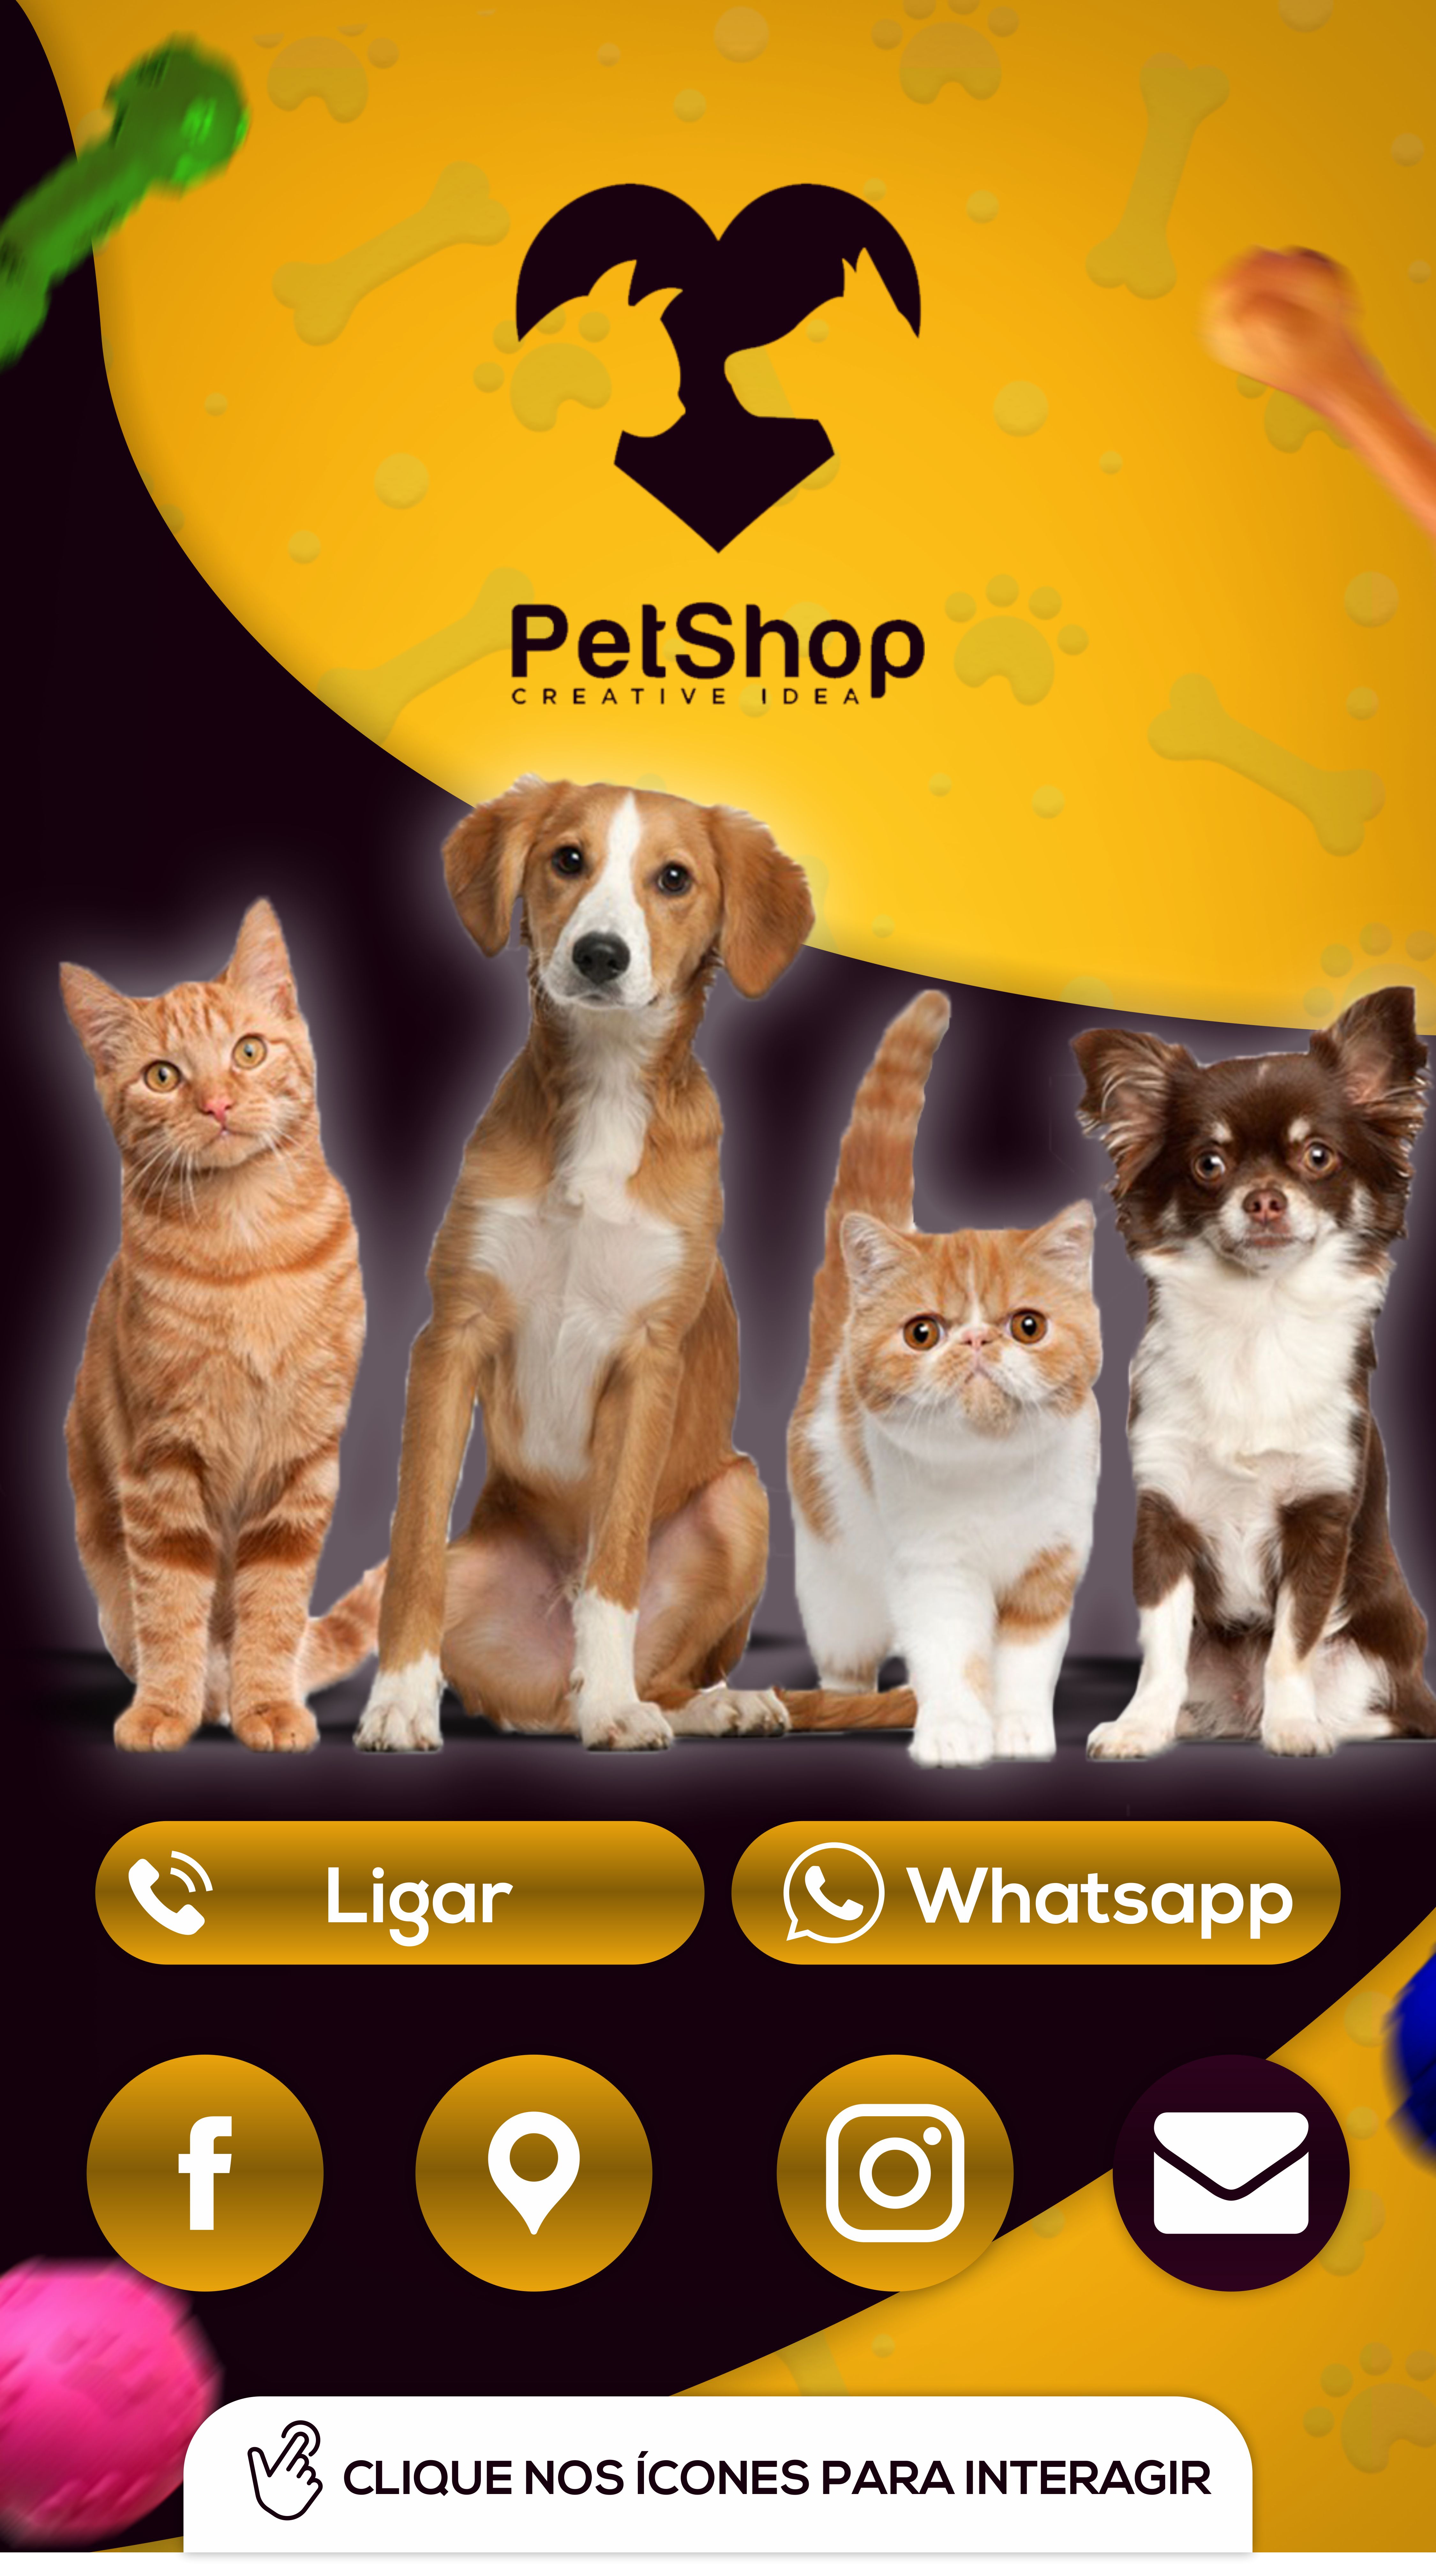 PET_SHOP_02 – JPEG